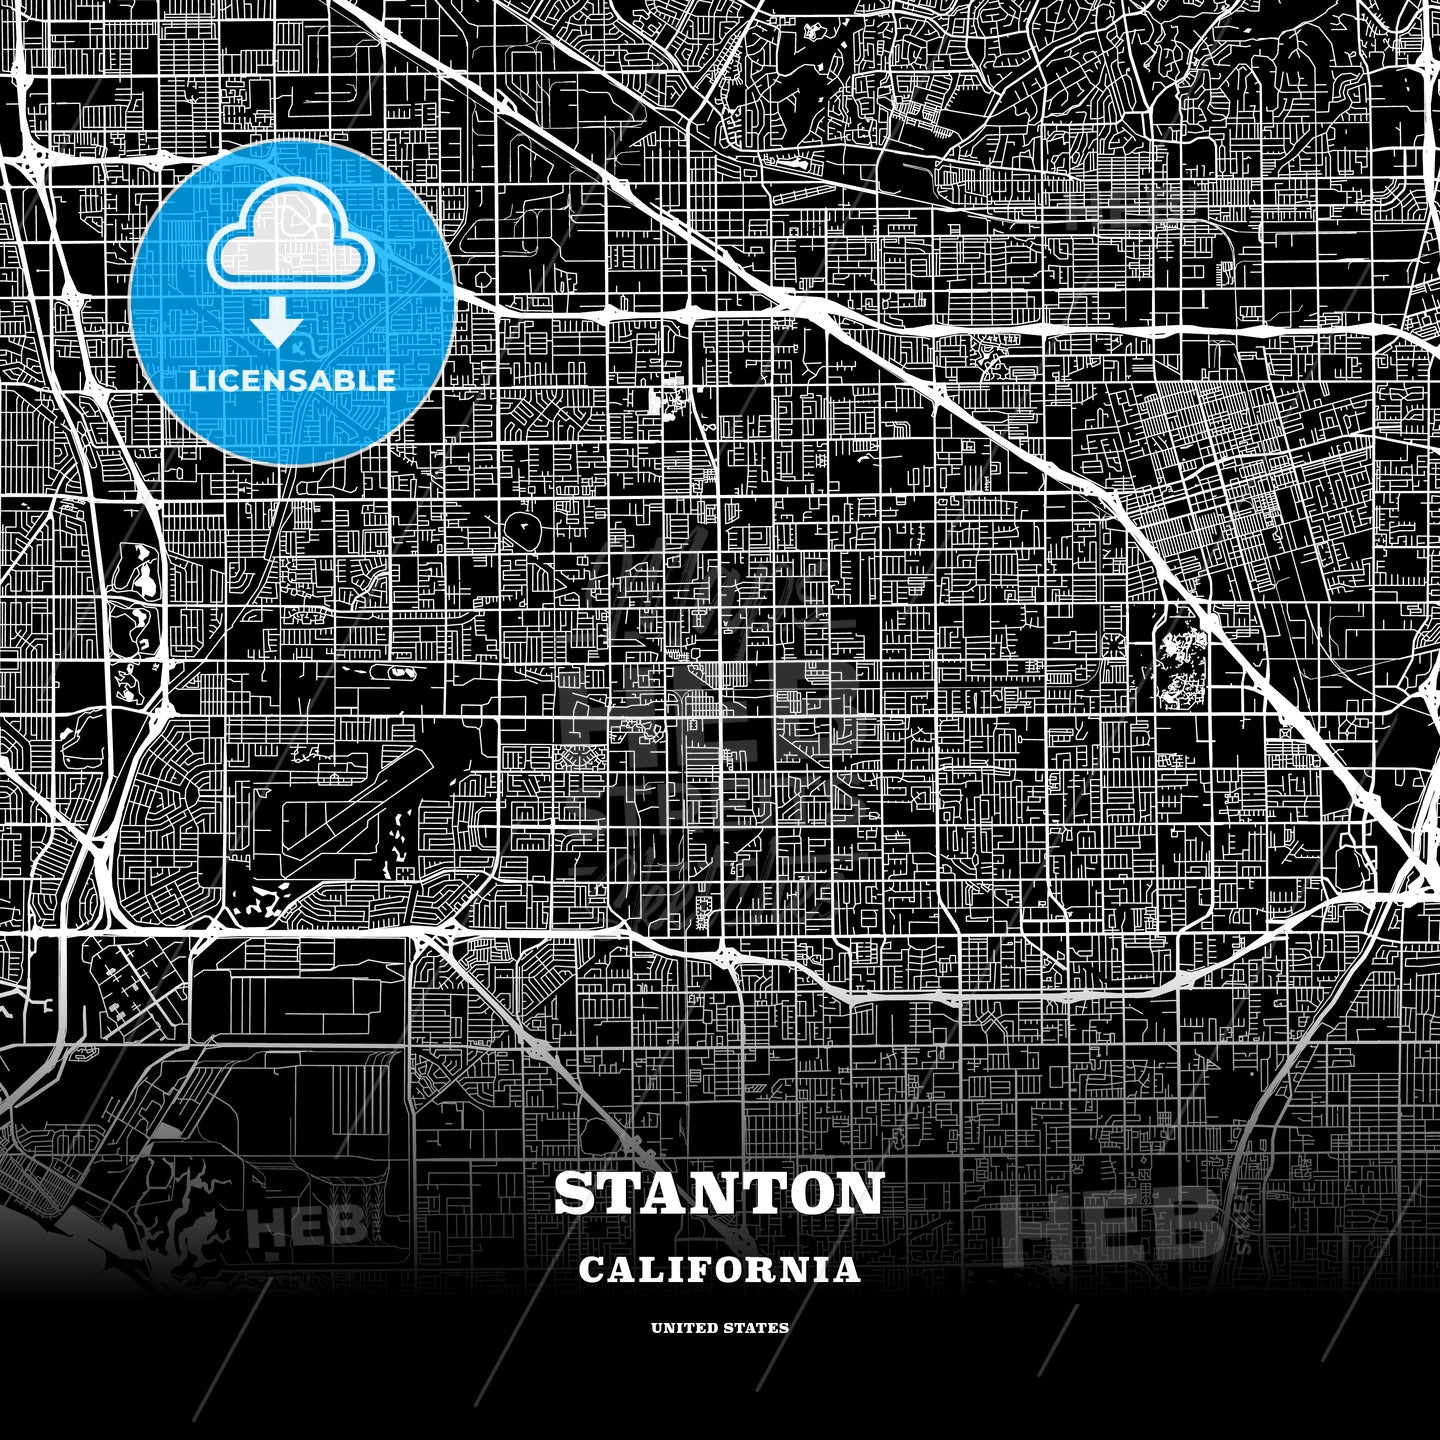 Stanton, California, USA map